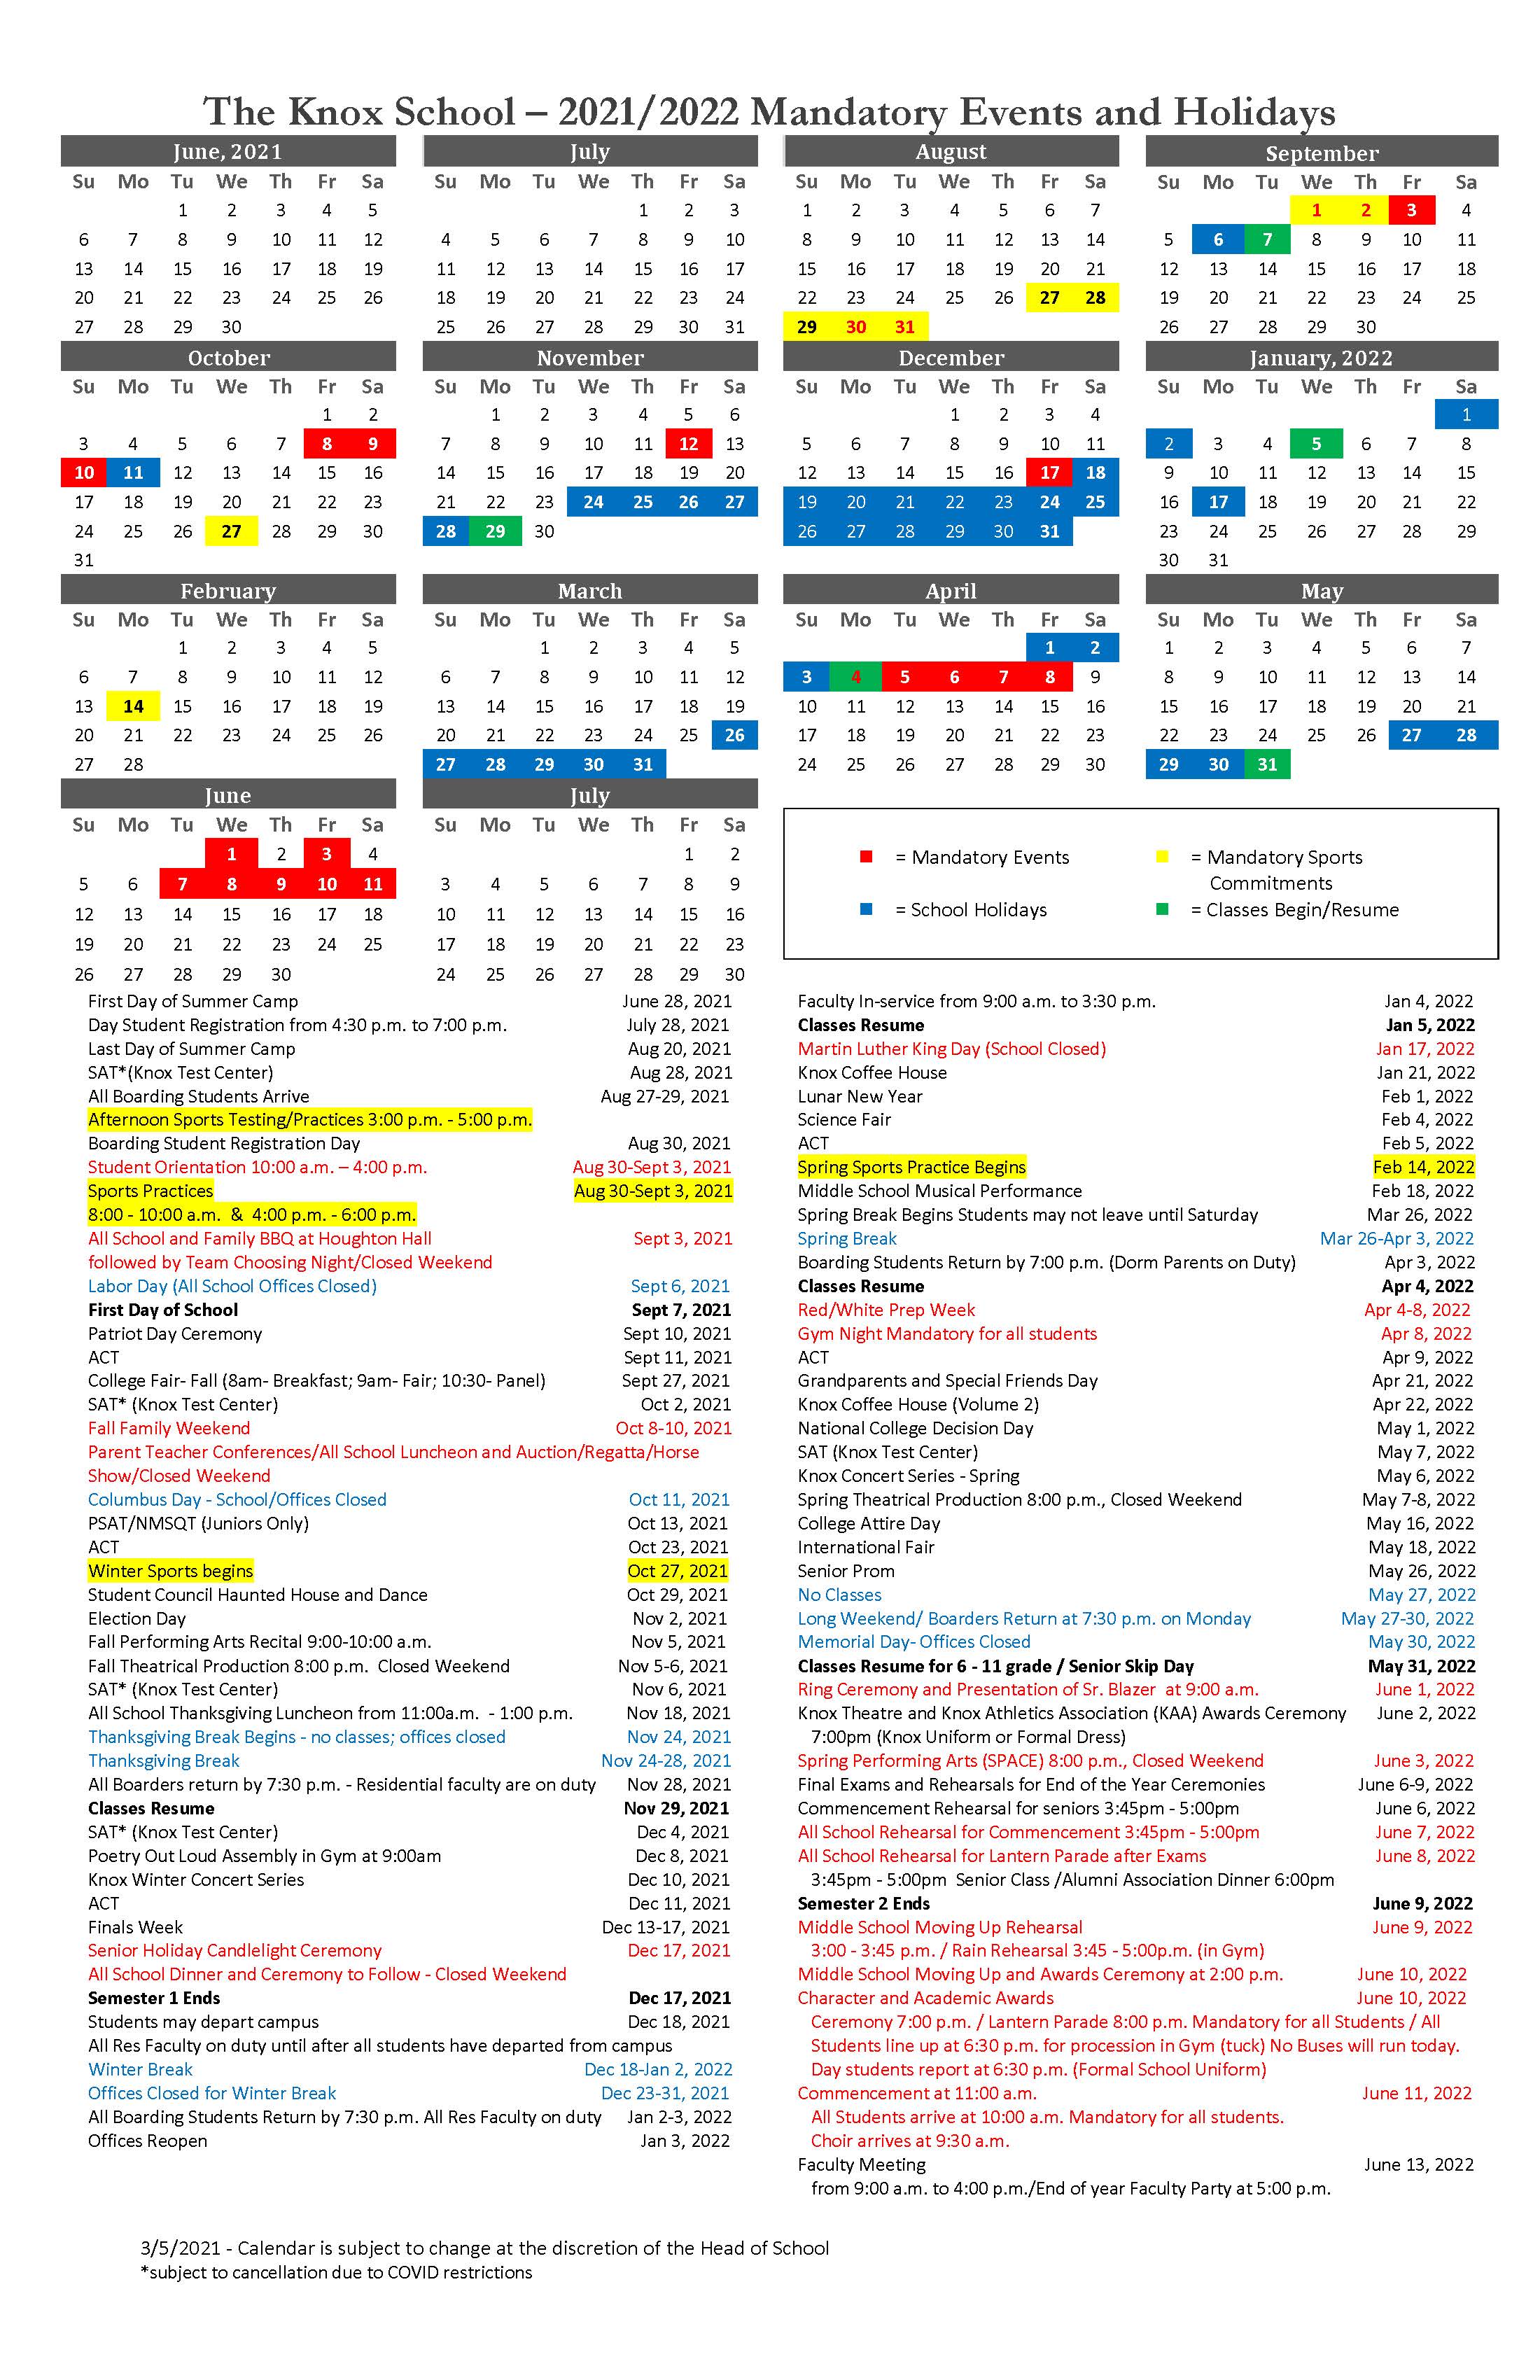 Knox Calendar The Knox School